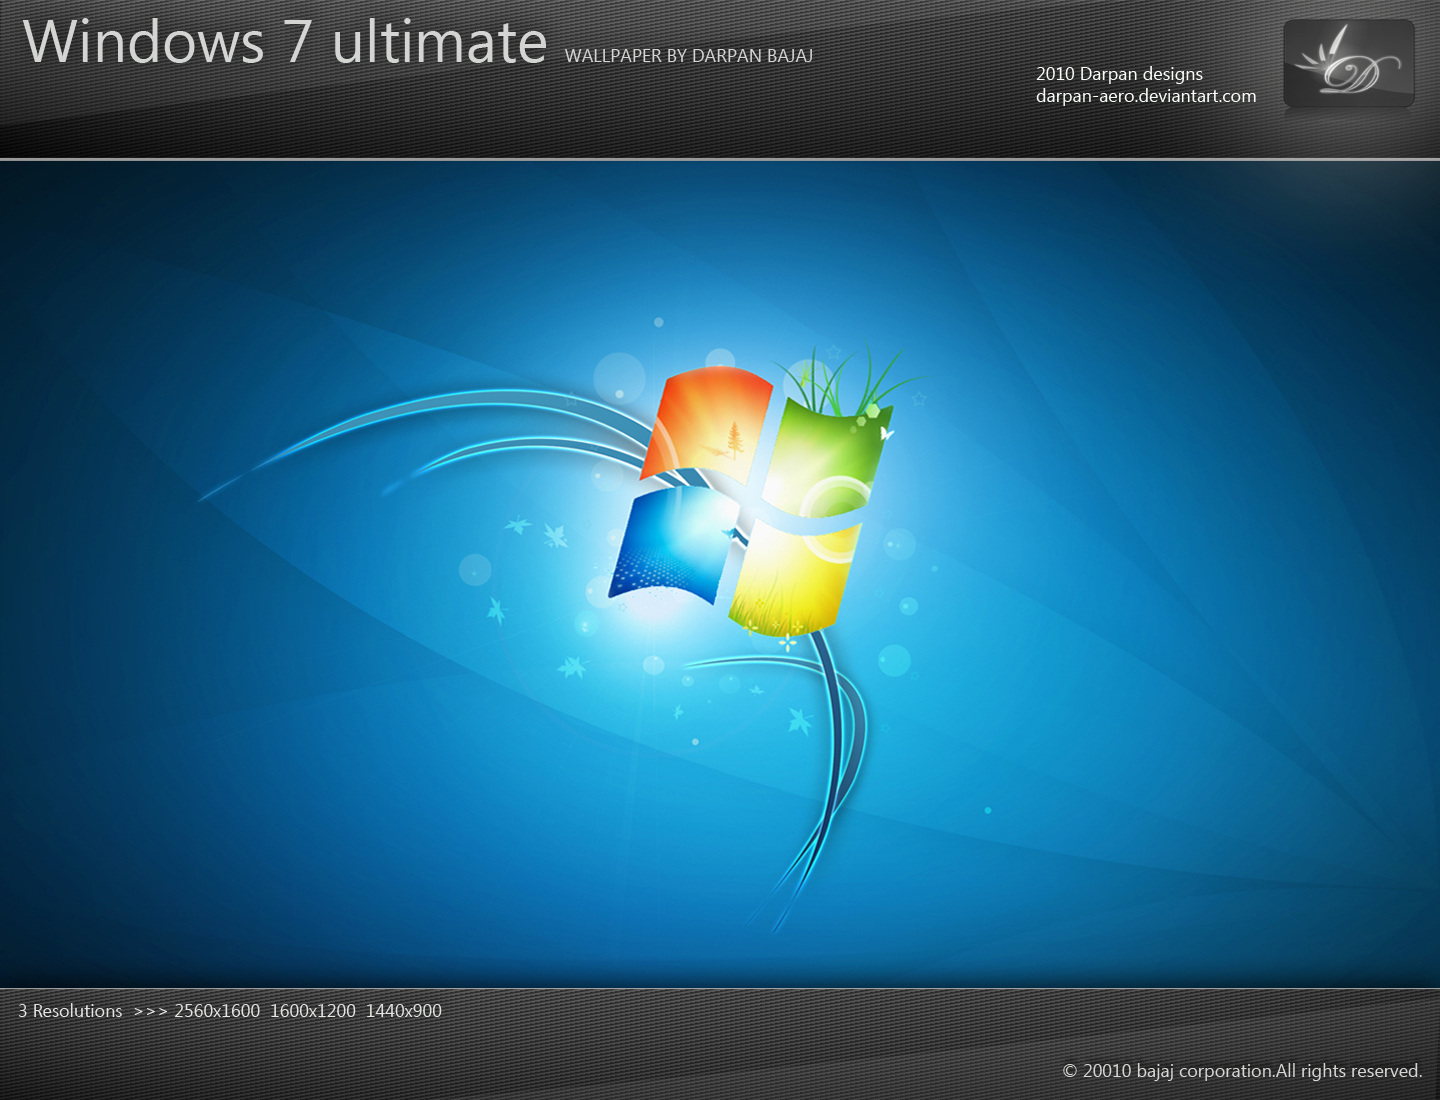 Windows 7 Ultimate wallpaper by darpan-aero on DeviantArt